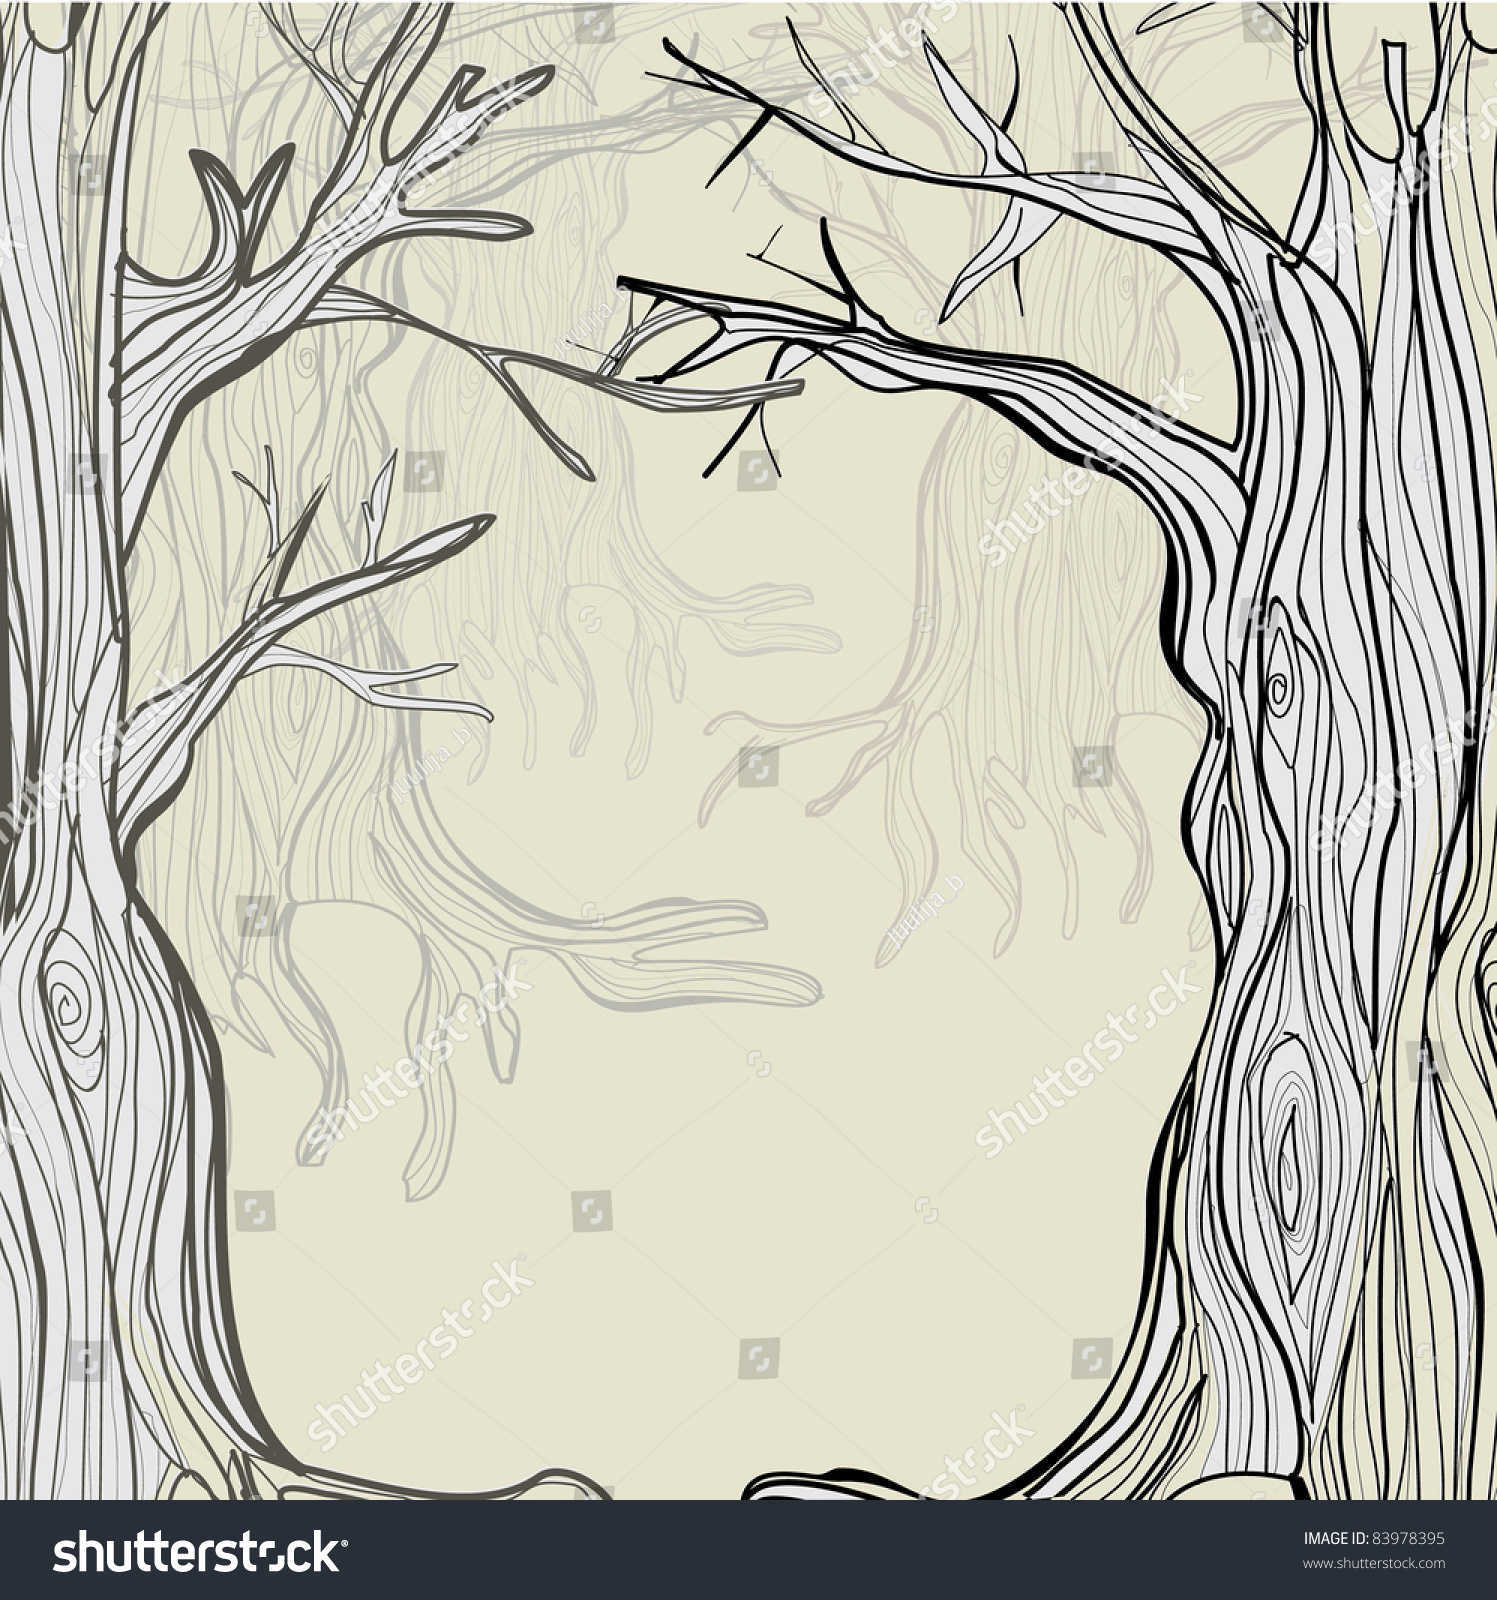 Vector Tree Background - 83978395 : Shutterstock